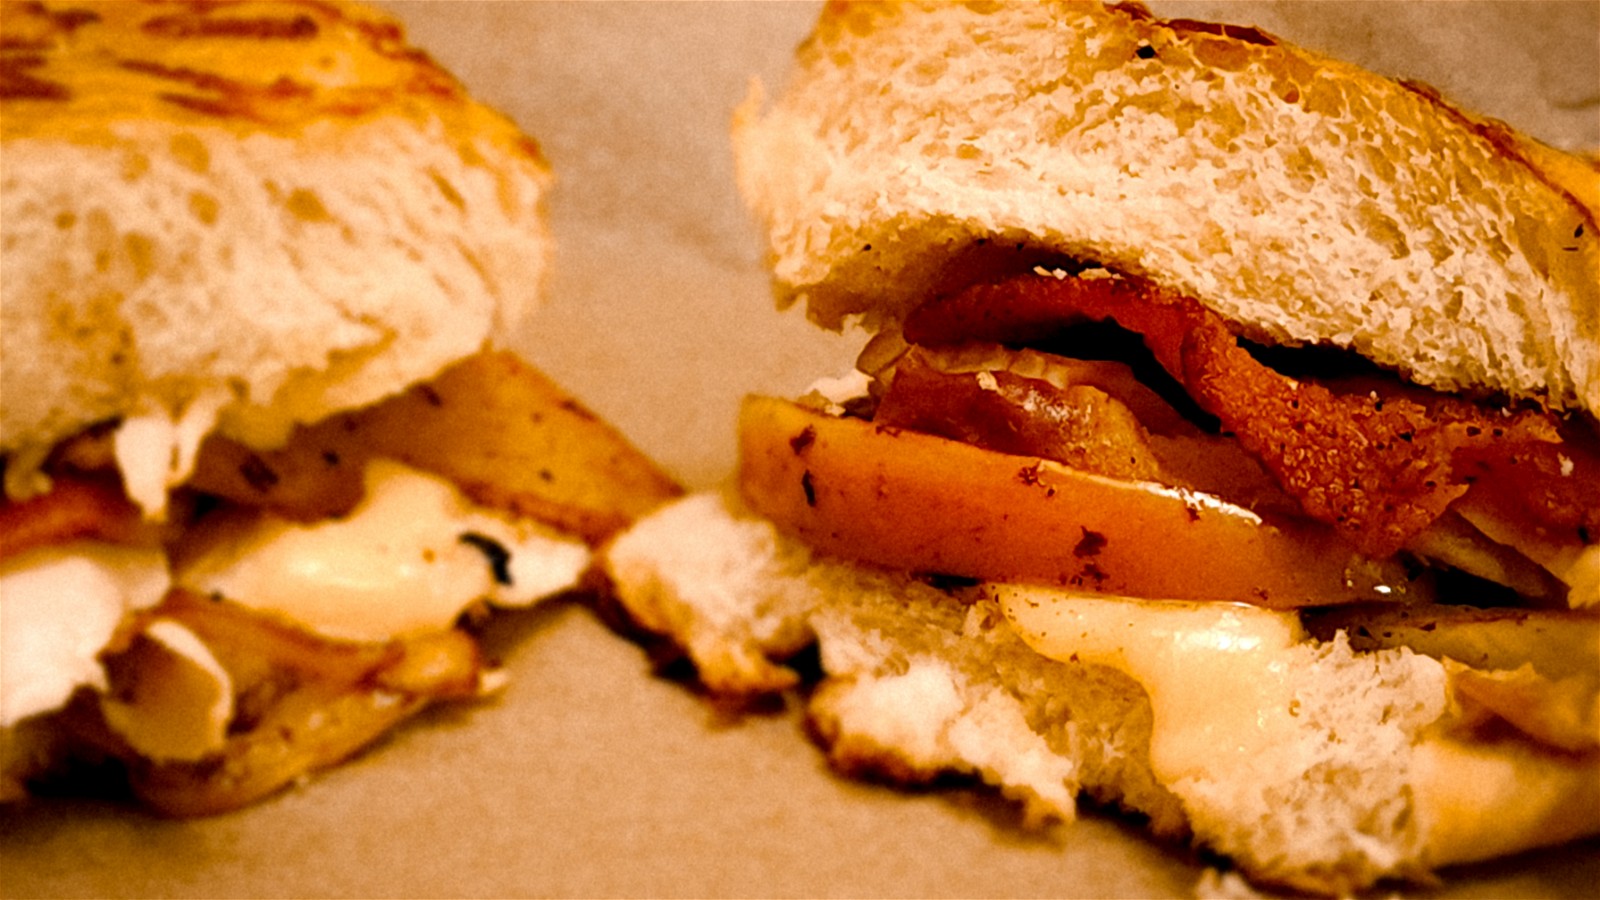 Image of Turkey Bacon Cheddar Melt with Caramelized Onion & Apple